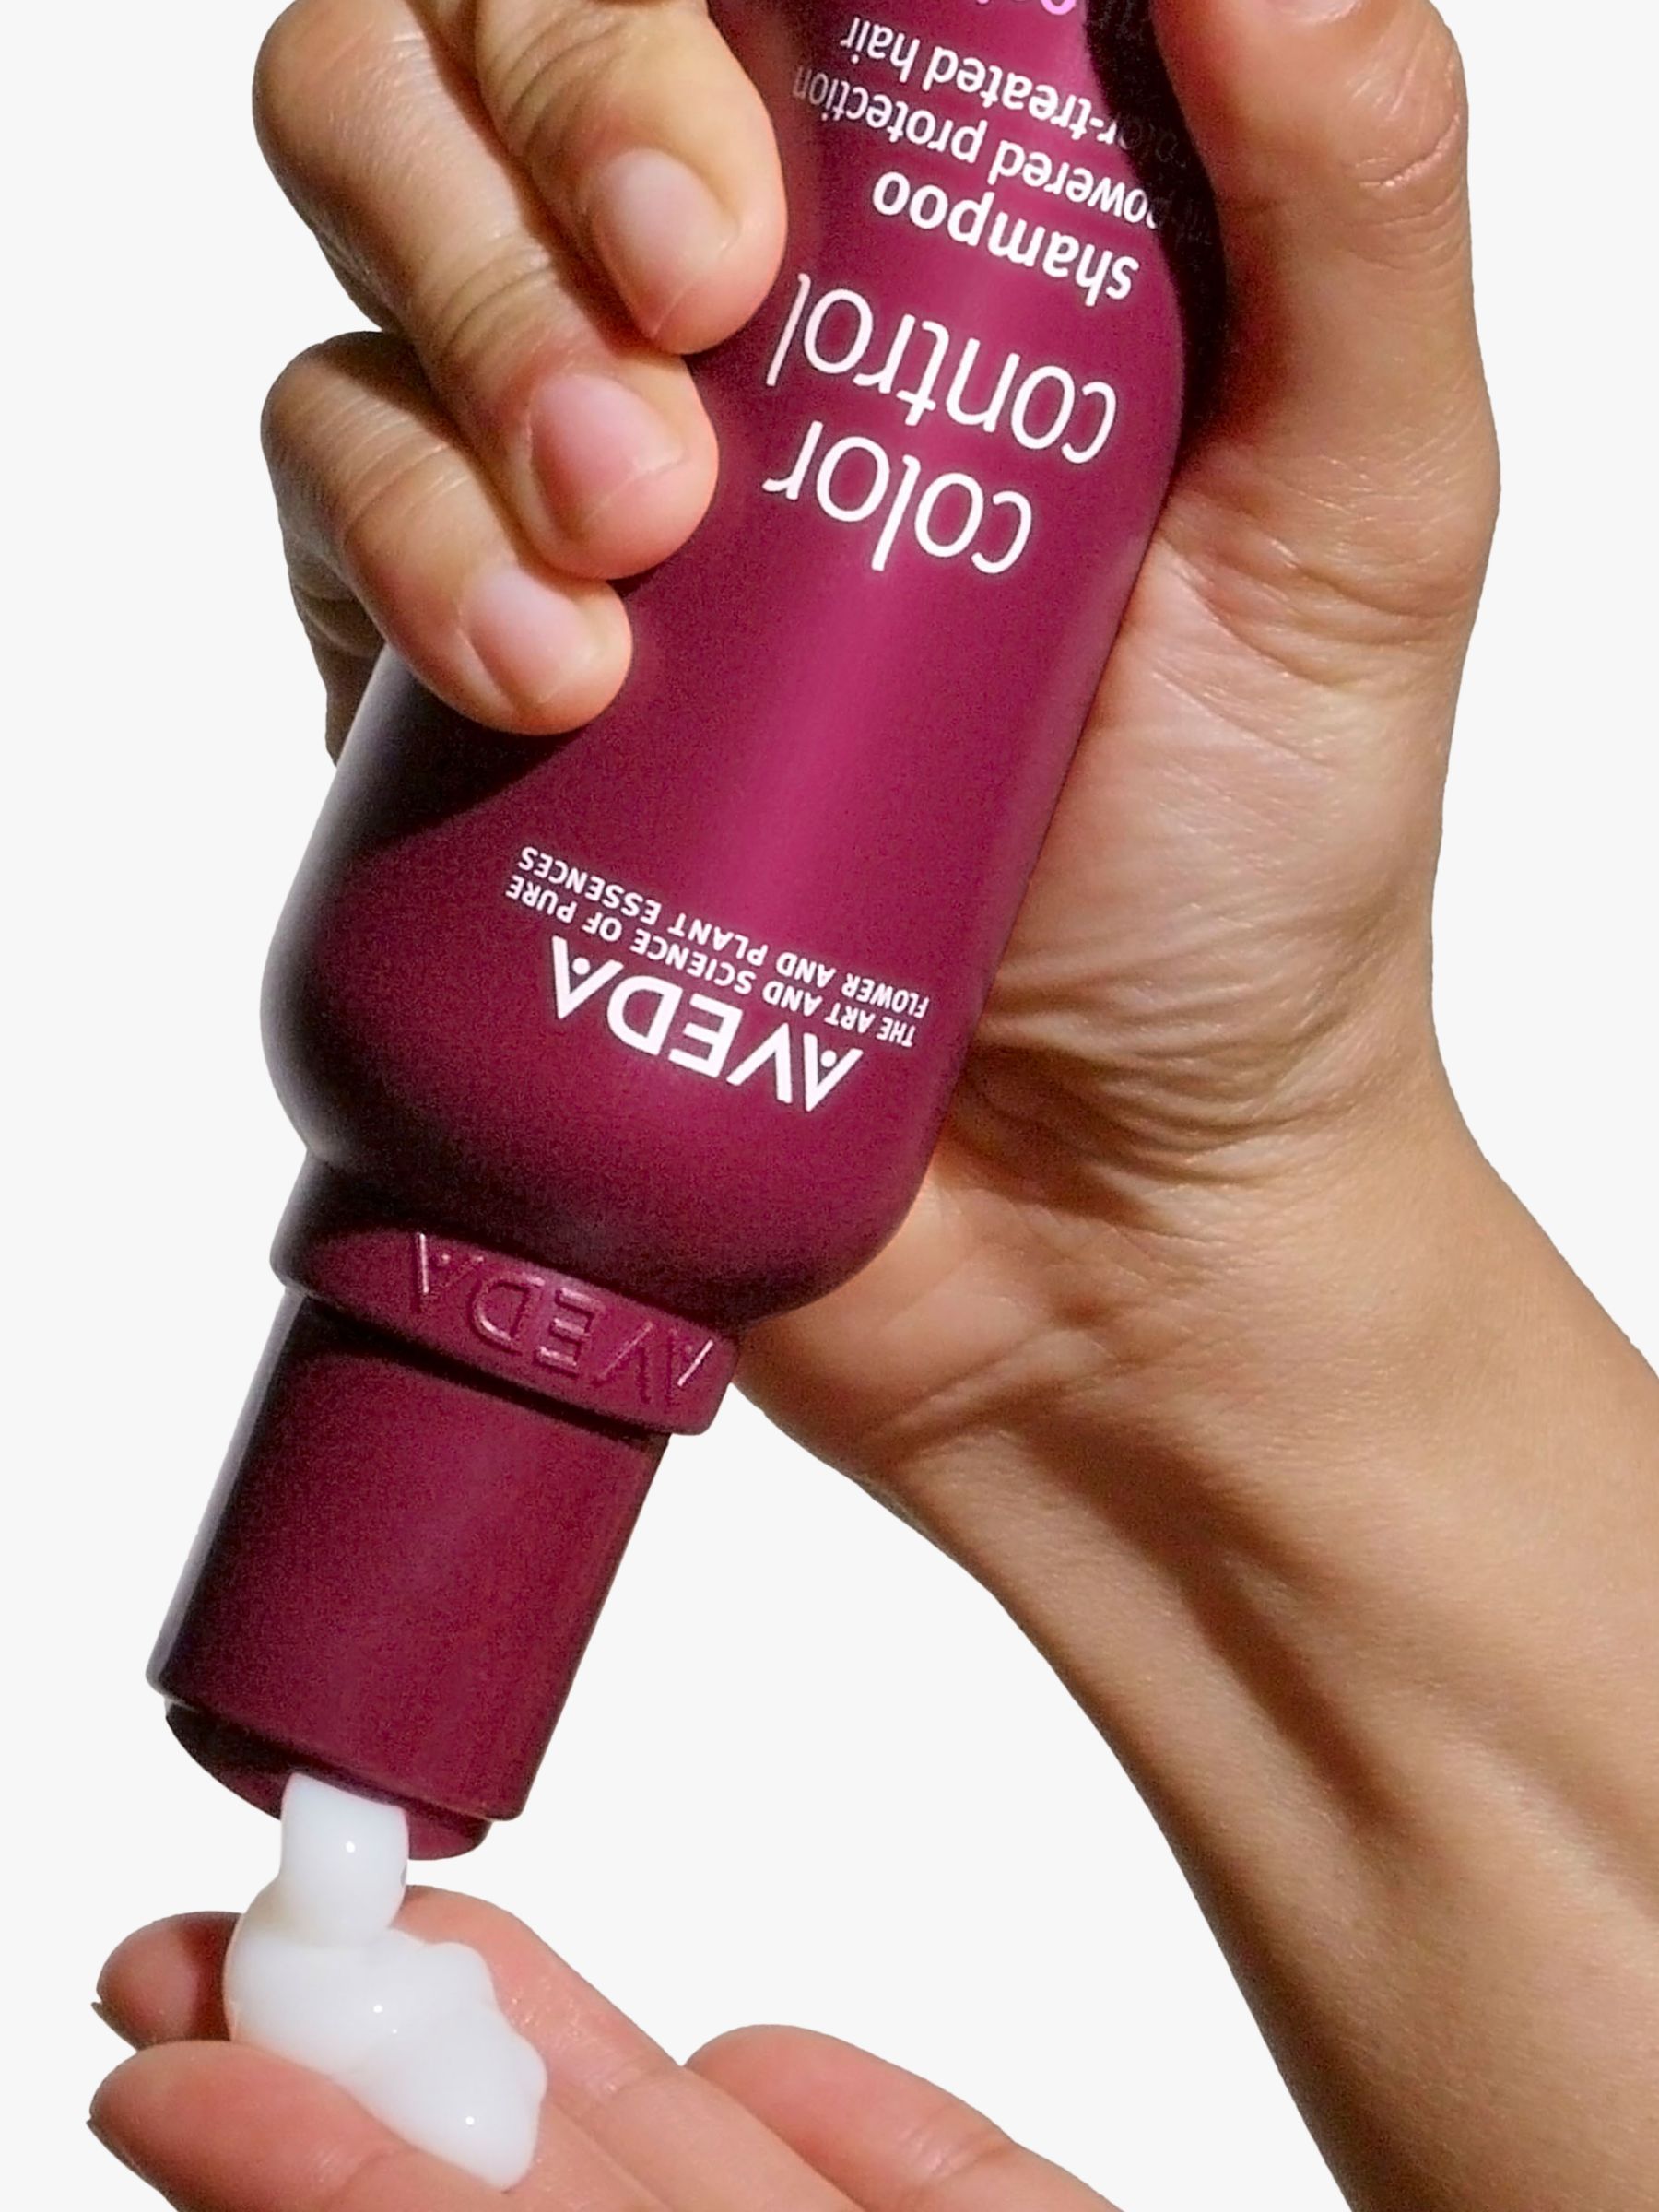 Aveda Colour Control Rich Shampoo, 1000ml